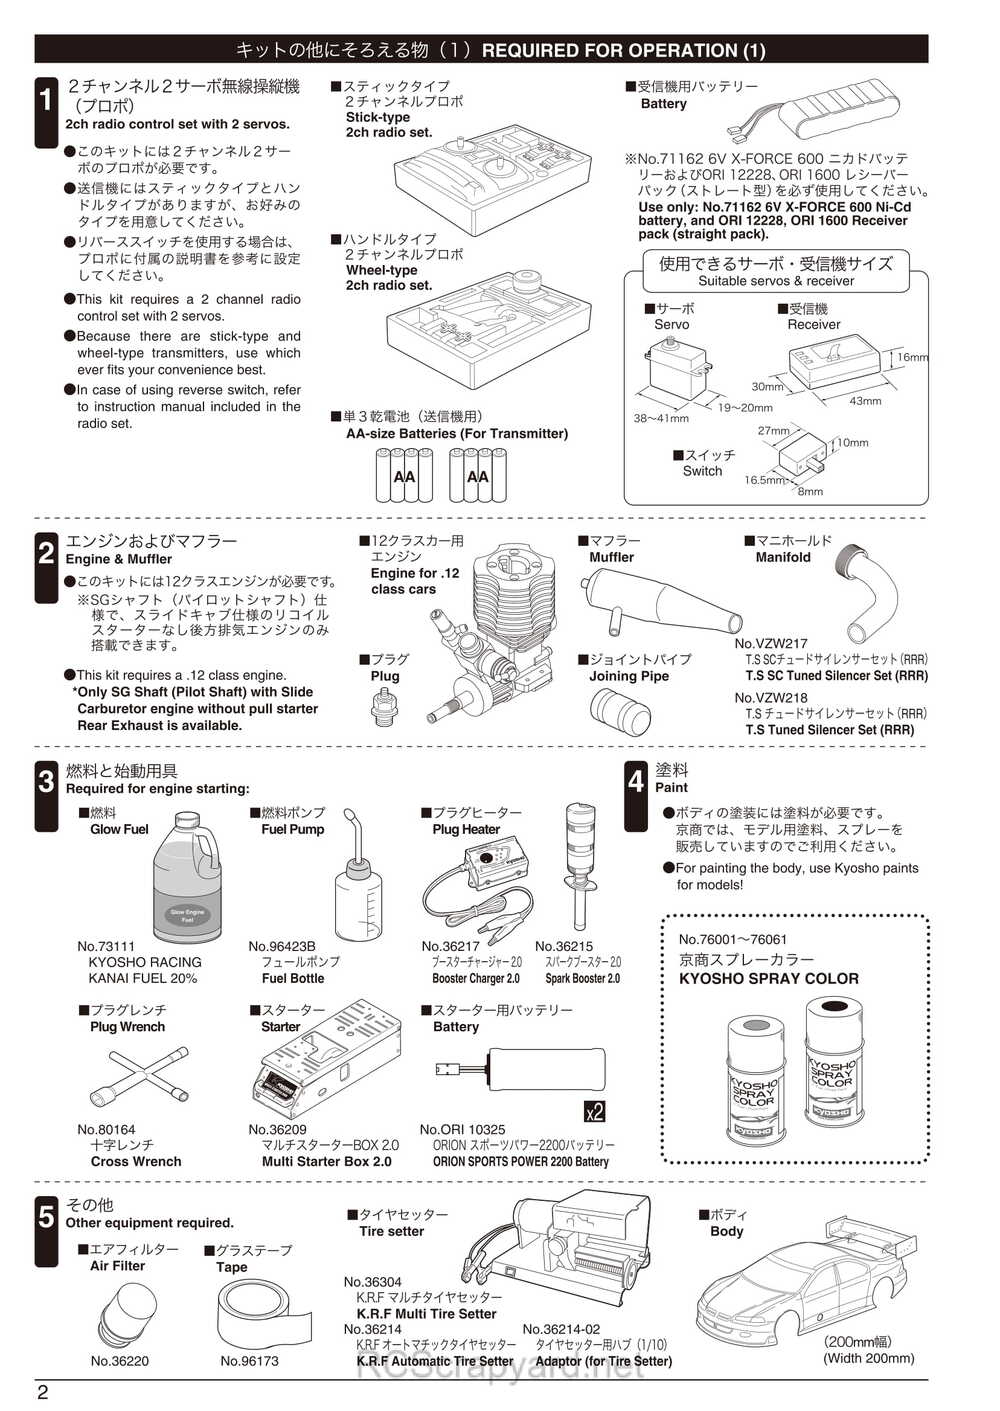 Kyosho - 31262 - V-One-RRR-Evo2 - Manual - Page 02